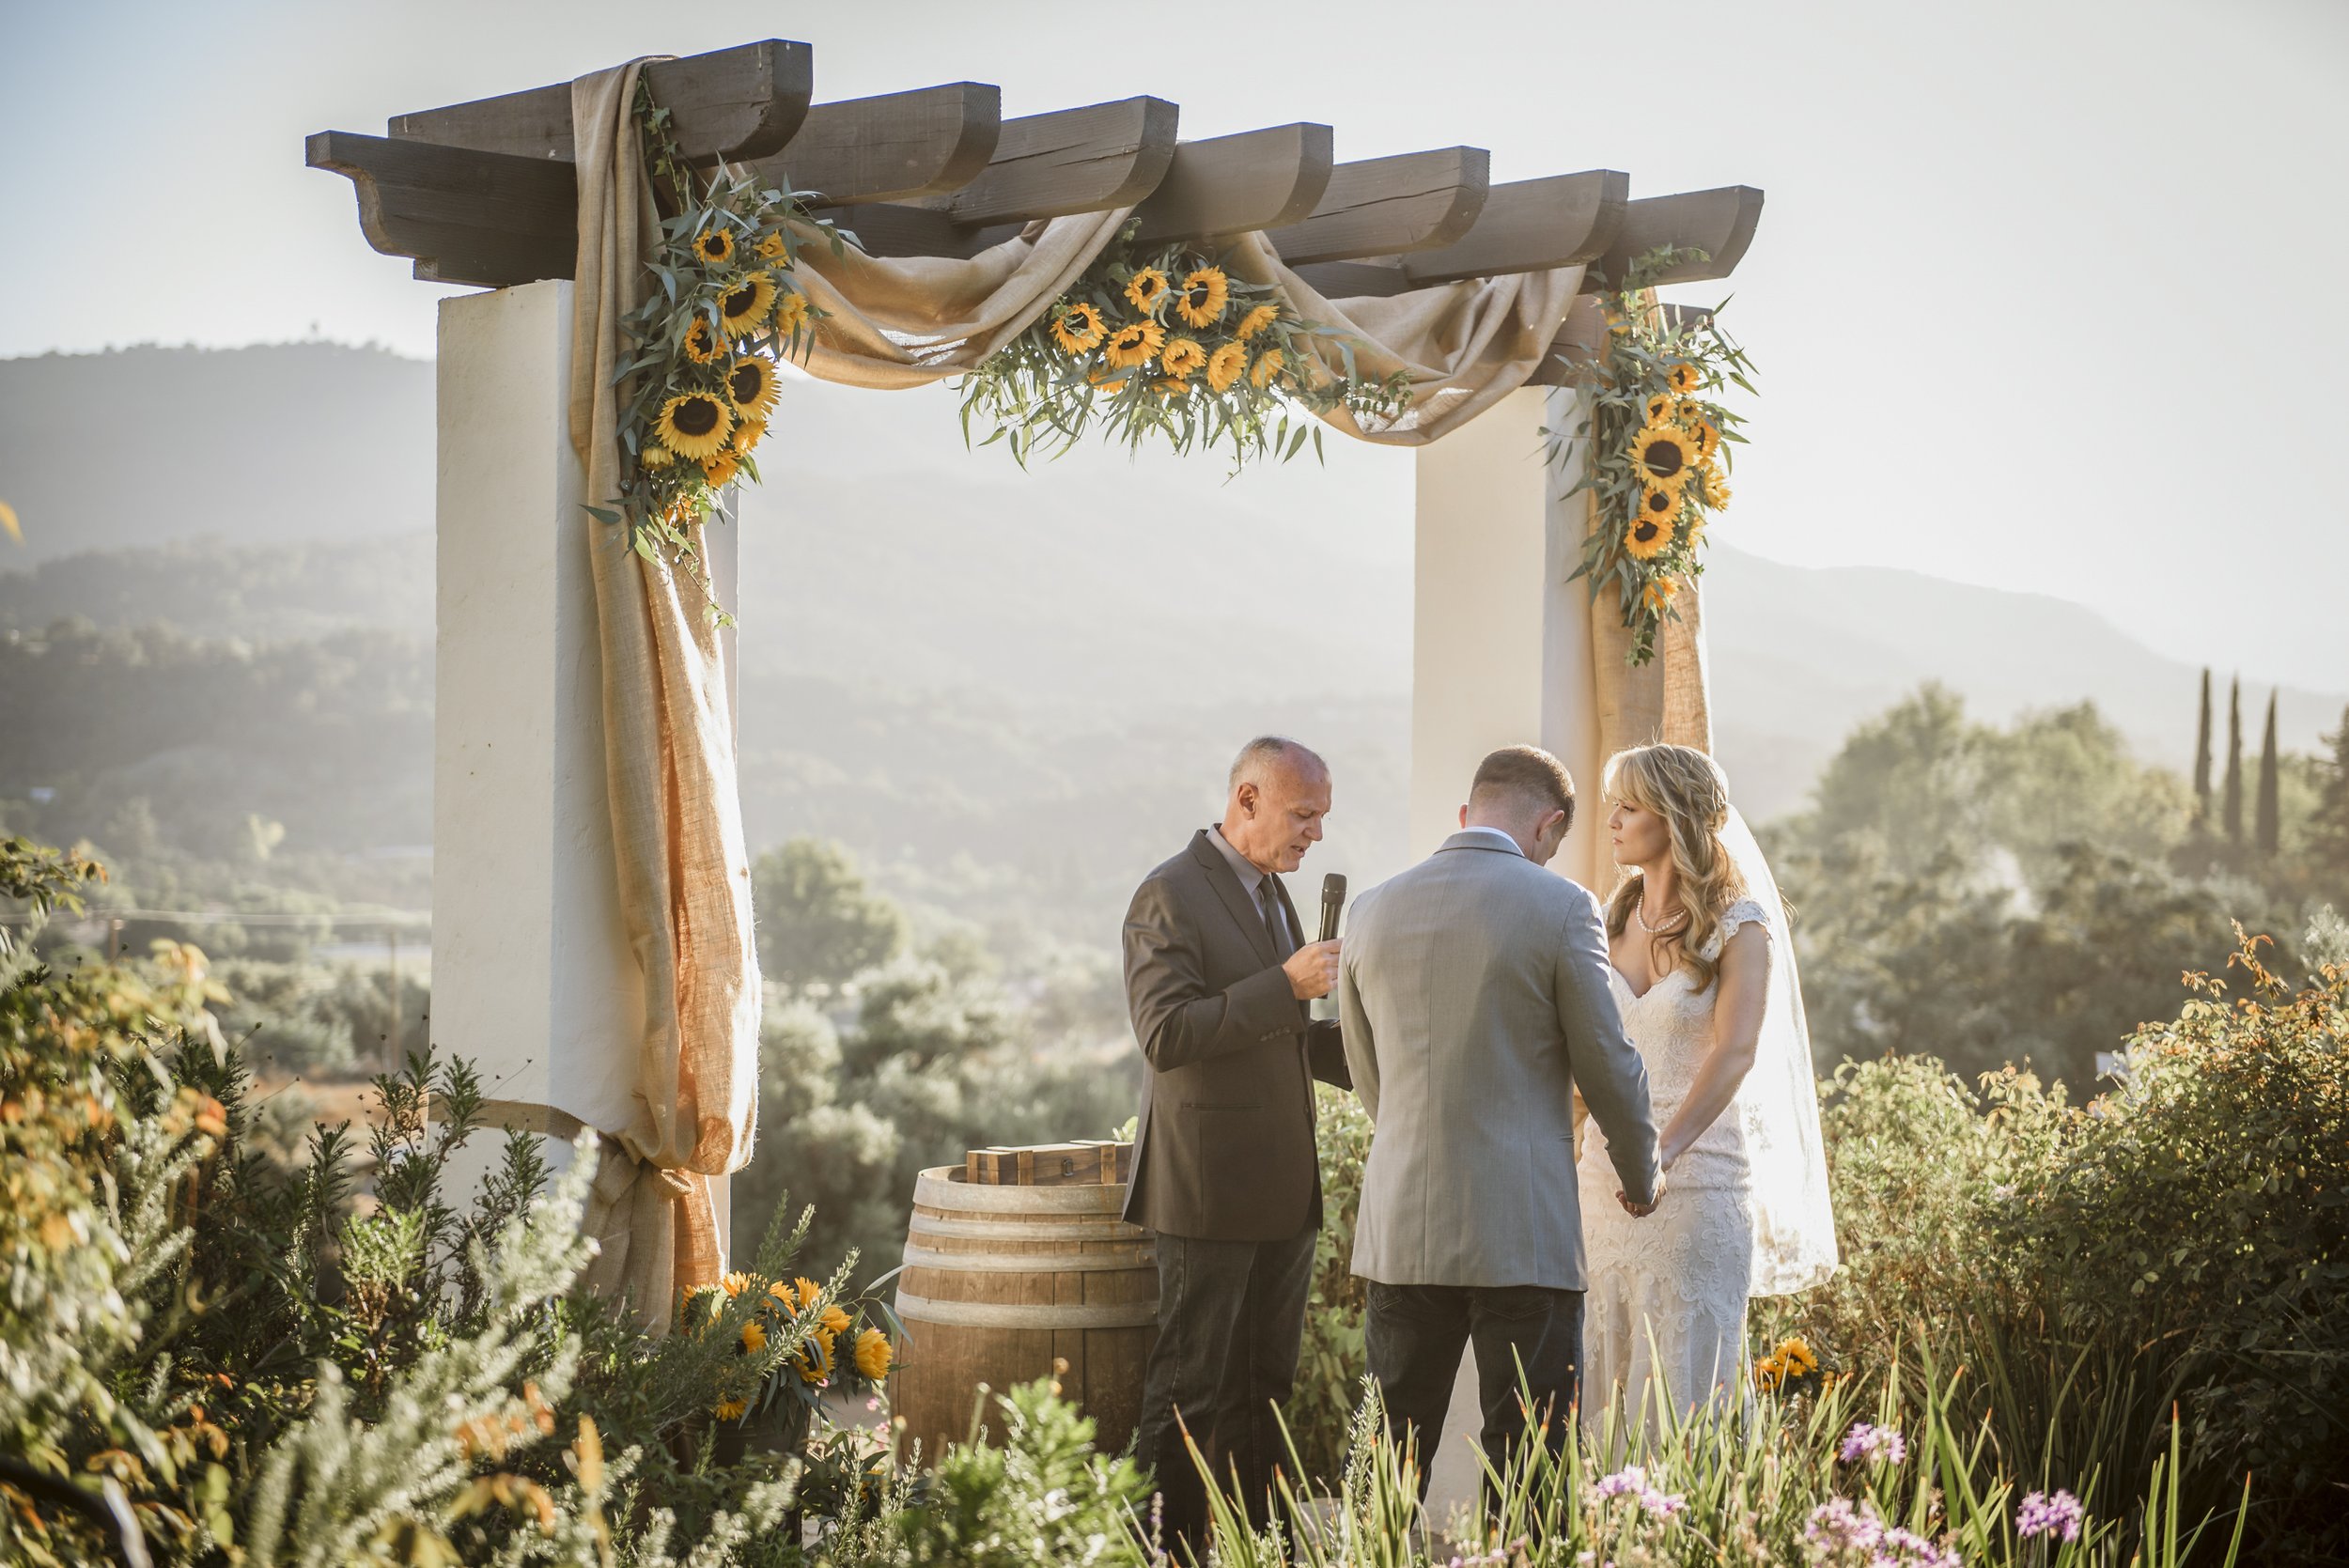 DSC_4514 -Los Angeles Rustic Sunflower Mountain Ranch Wedding - Yana's Photos - Los Angeles & Destination Wedding Photographer_ - The Queen Mary Wedding.jpg